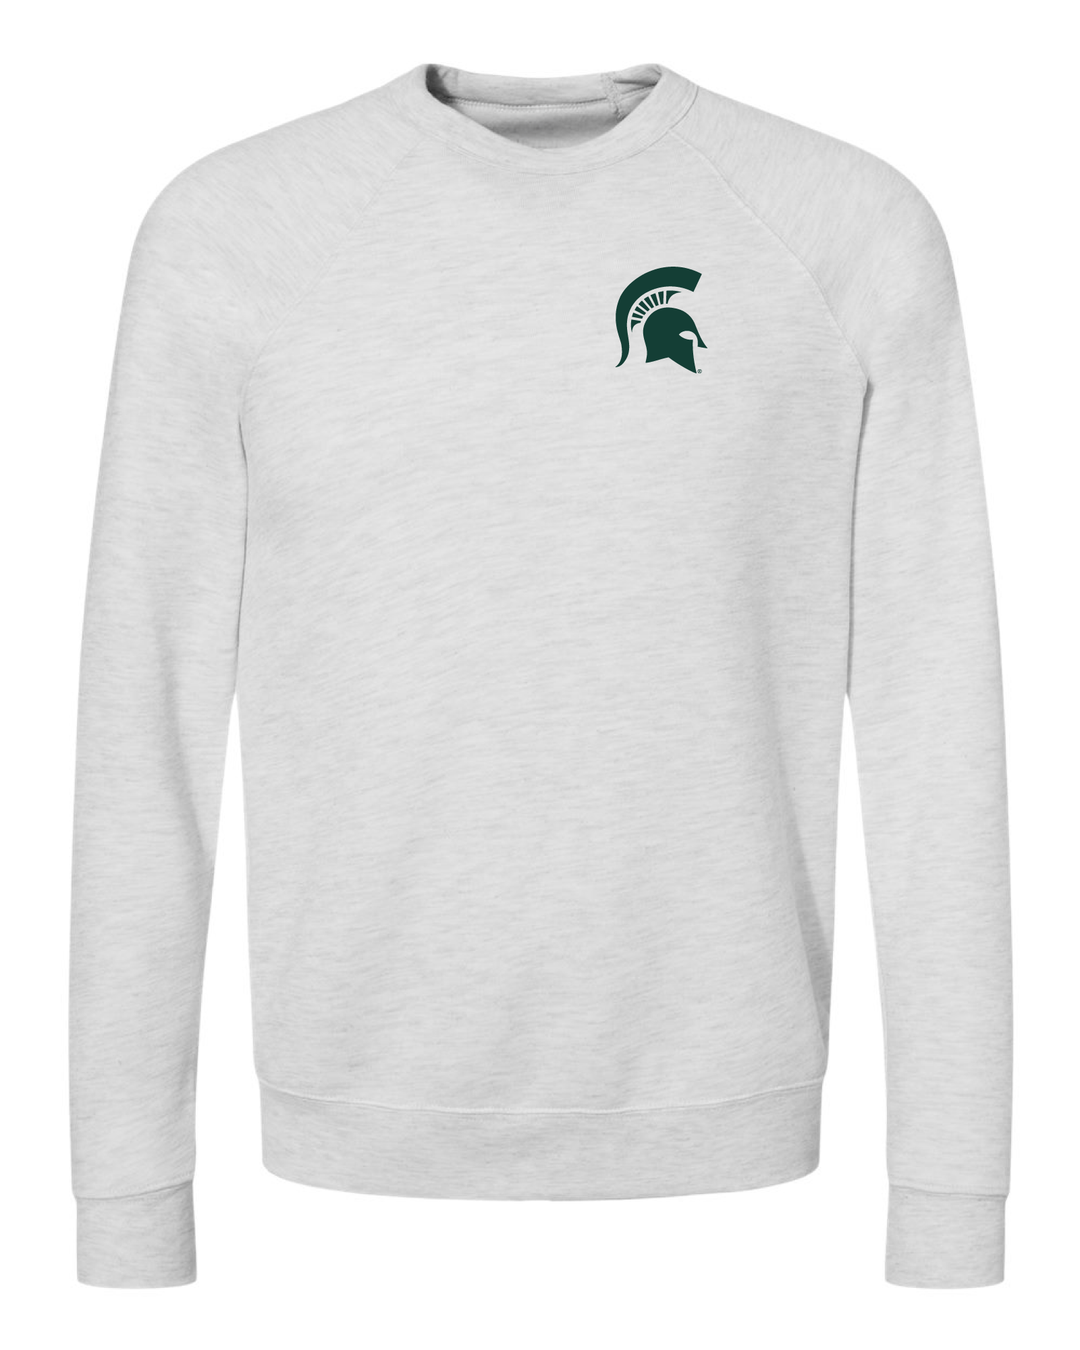 White Spartan Helmet Crewneck Sweatshirt for Michigan State University